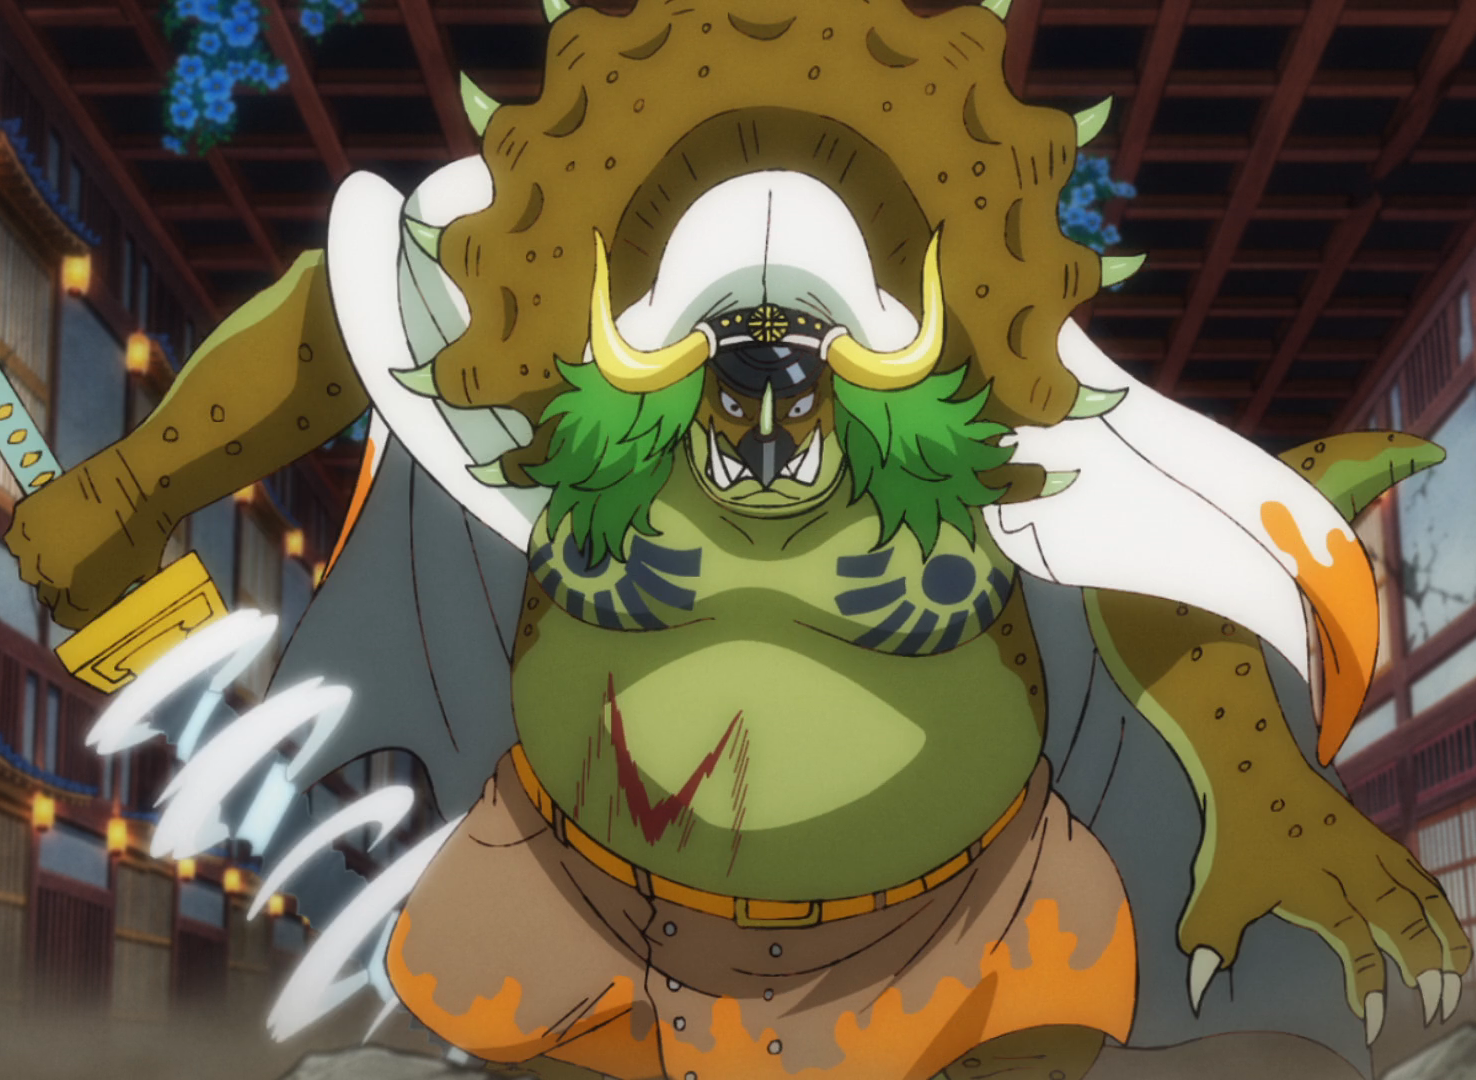 Anime Aesthetic Kawaii Mythic Fantasy Triceratops Dinosaur